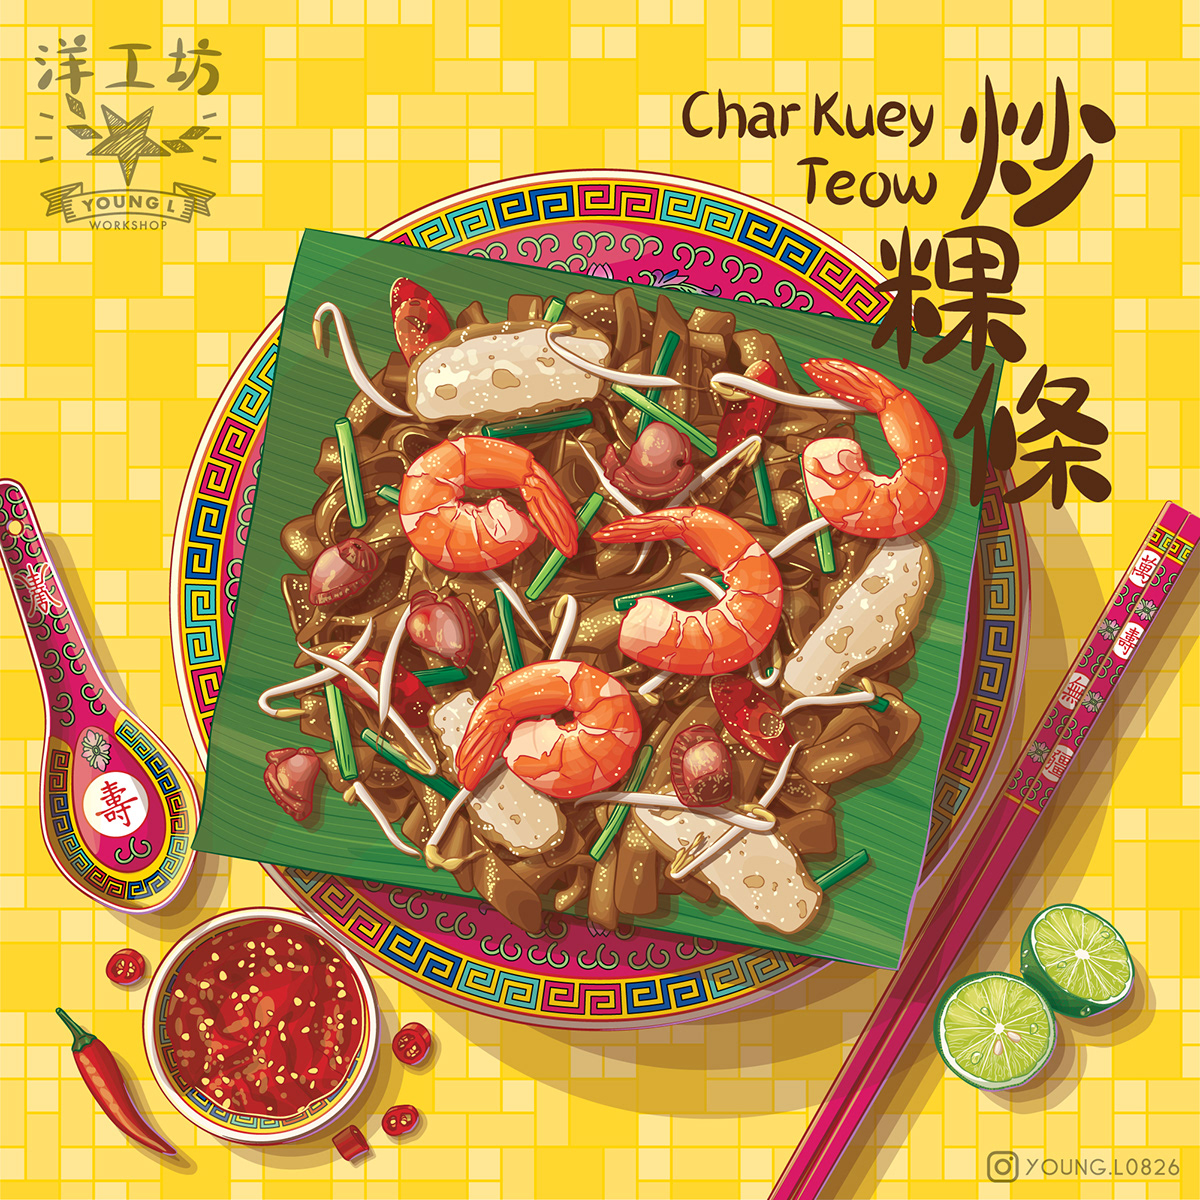 Nanyang kopitiam cuisine char kuey teow stir fried rice noodle 狗粮 中国风  